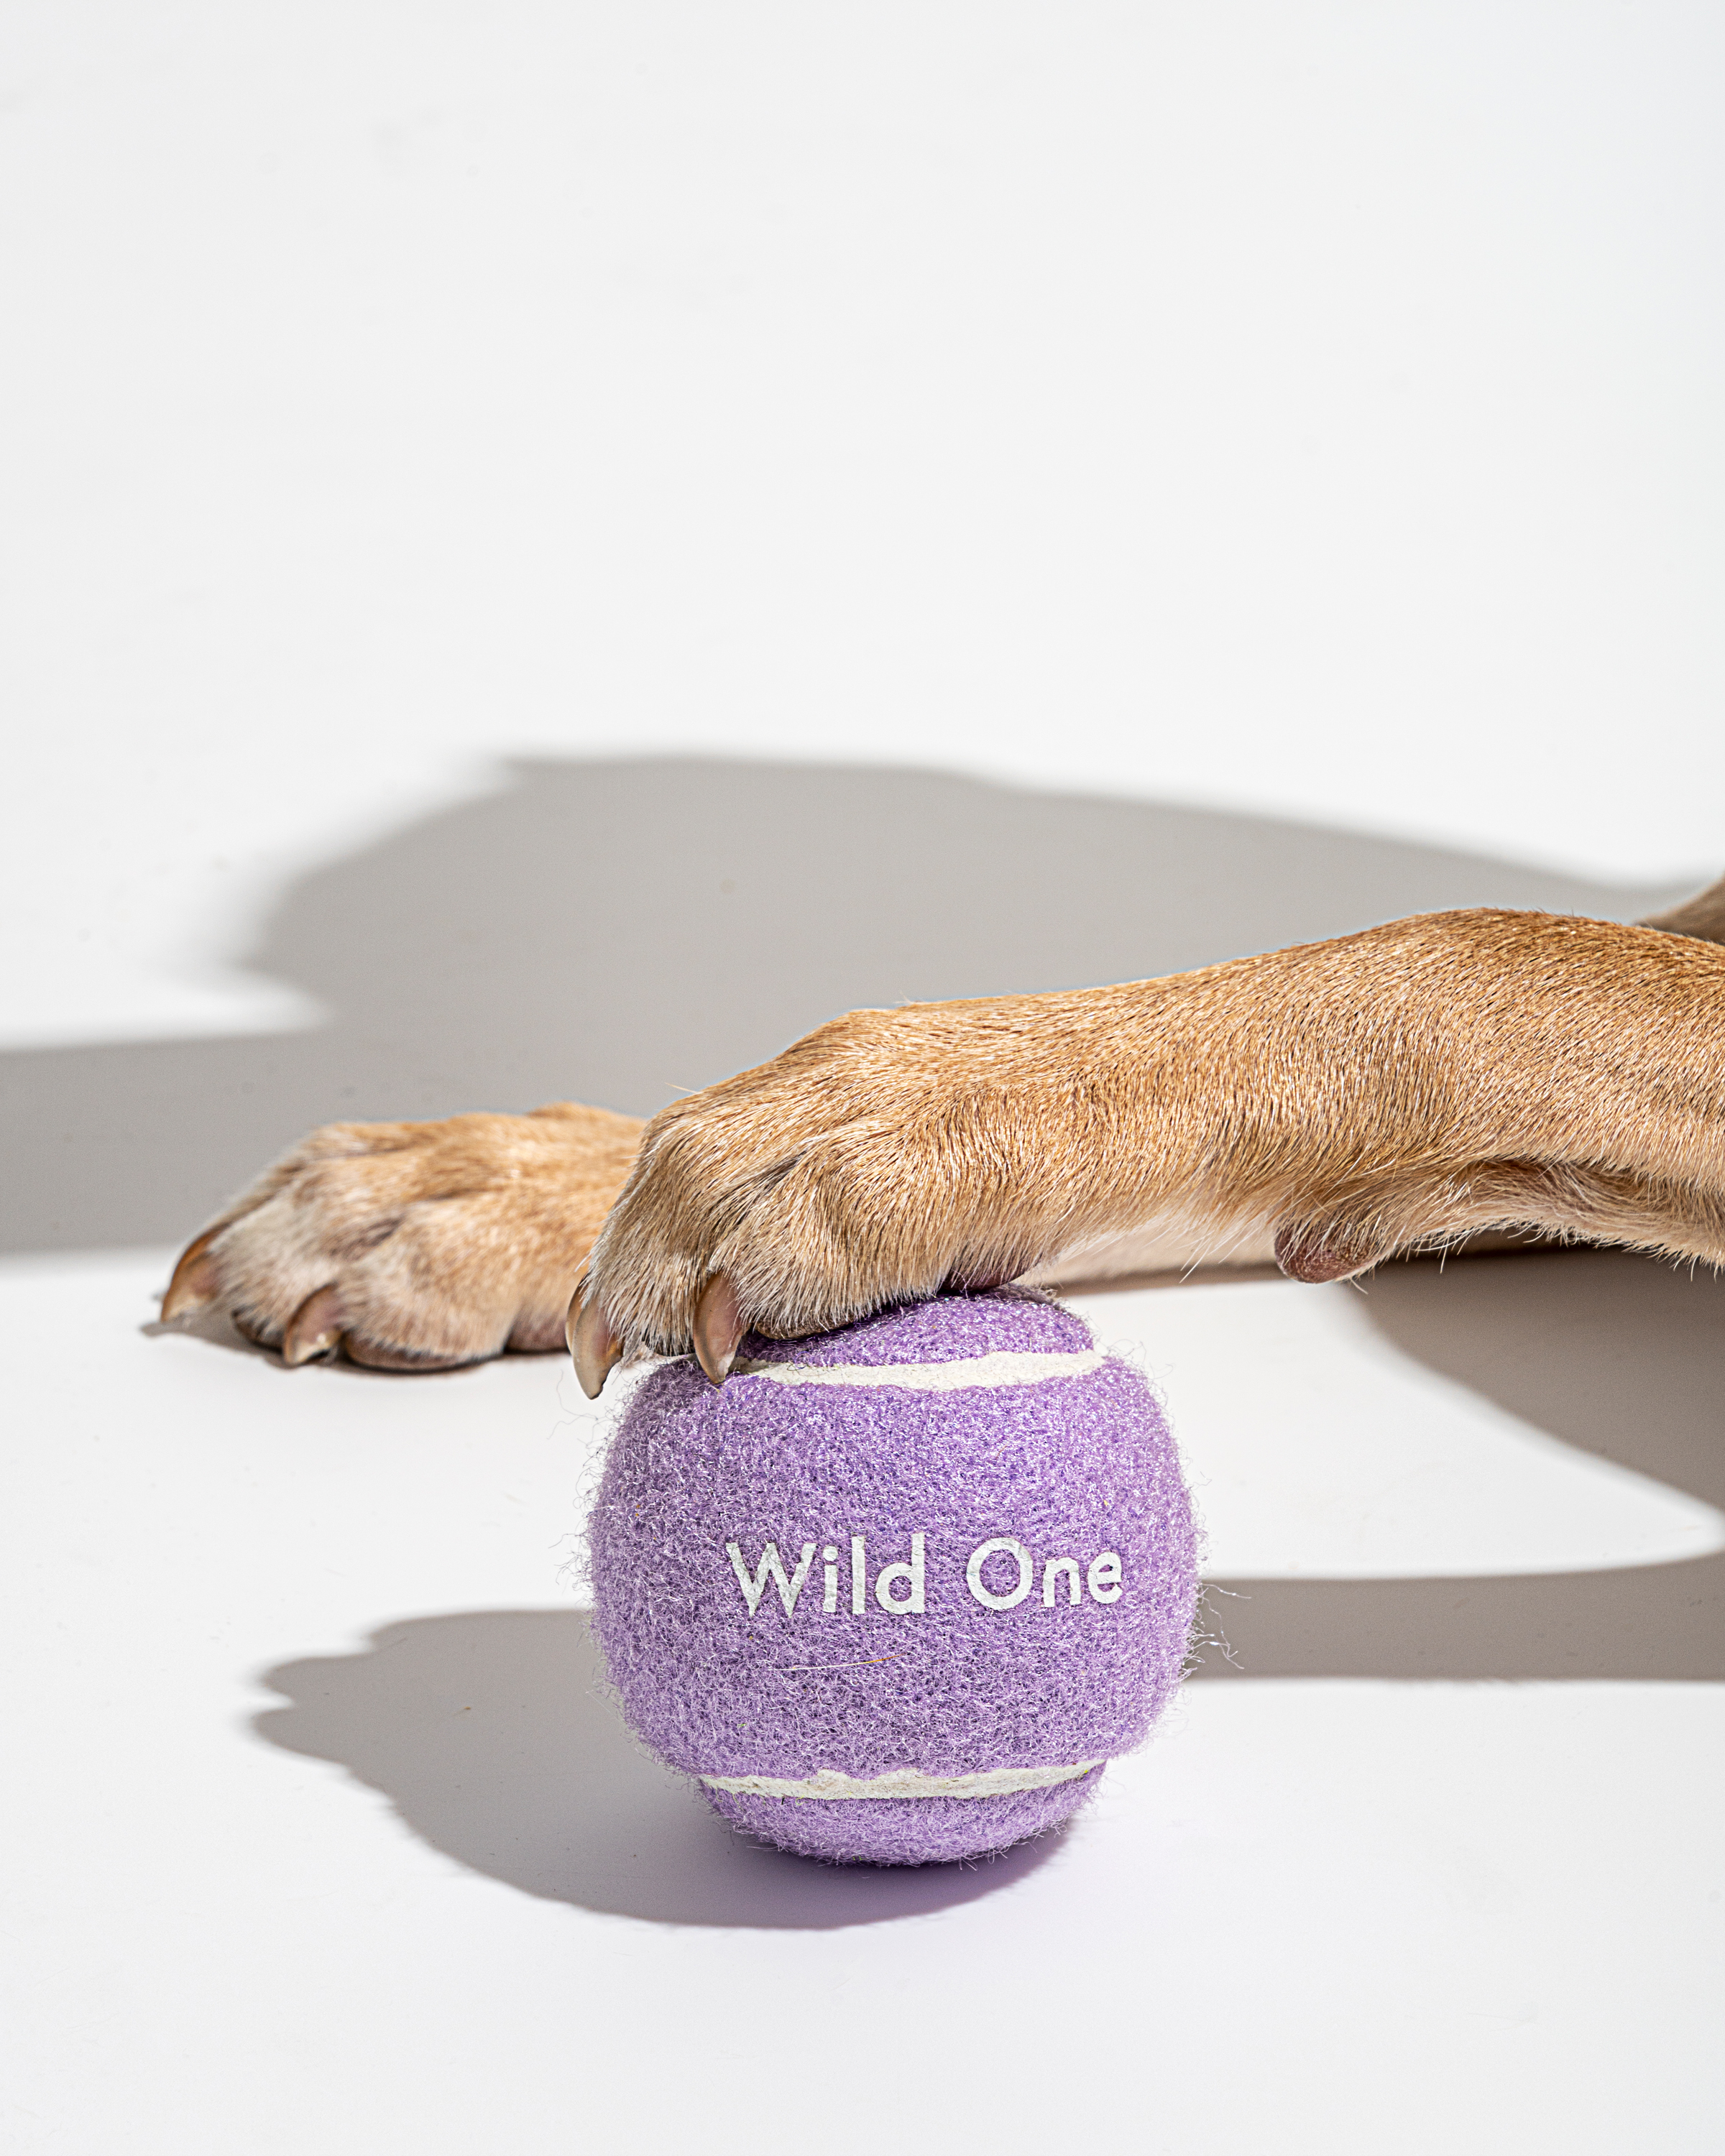 Wild One Tennis Tumble Dog Toy - Red